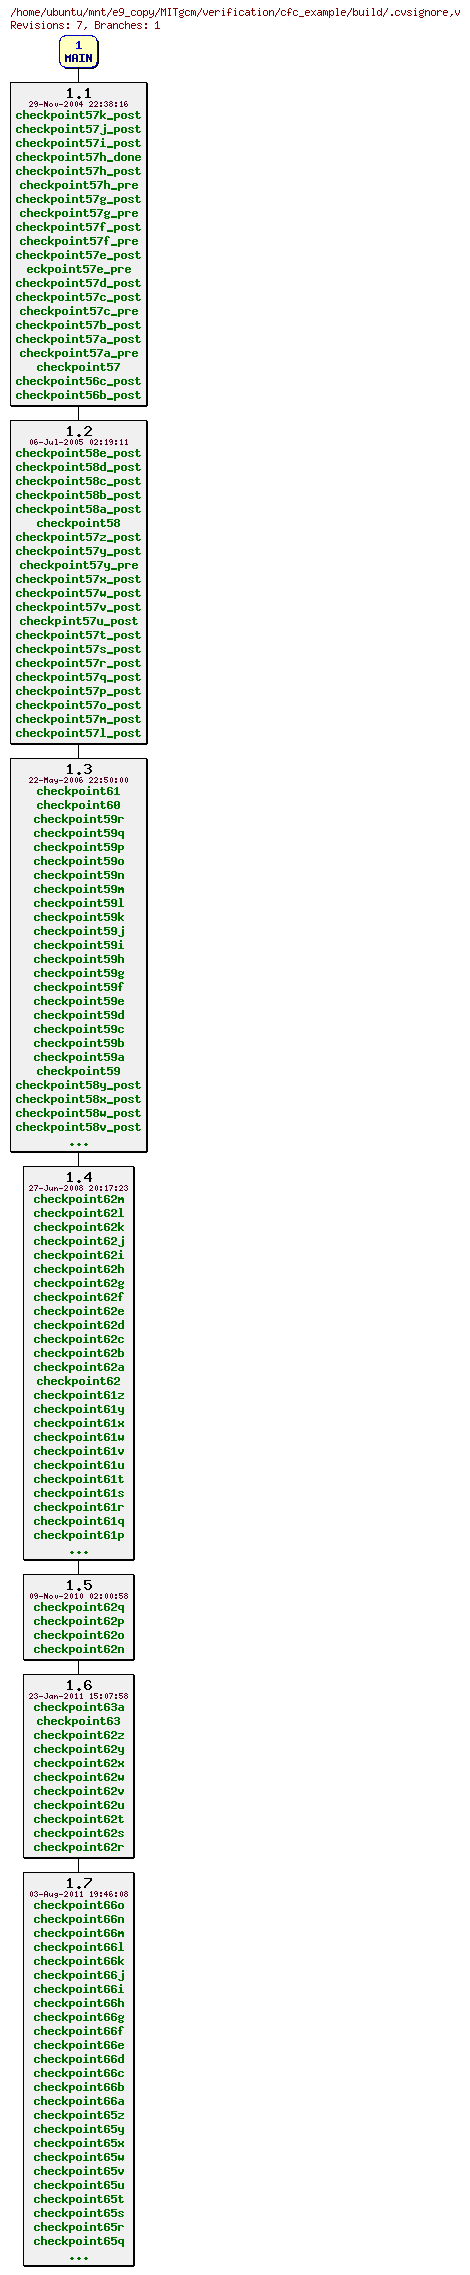 Revisions of MITgcm/verification/cfc_example/build/.cvsignore